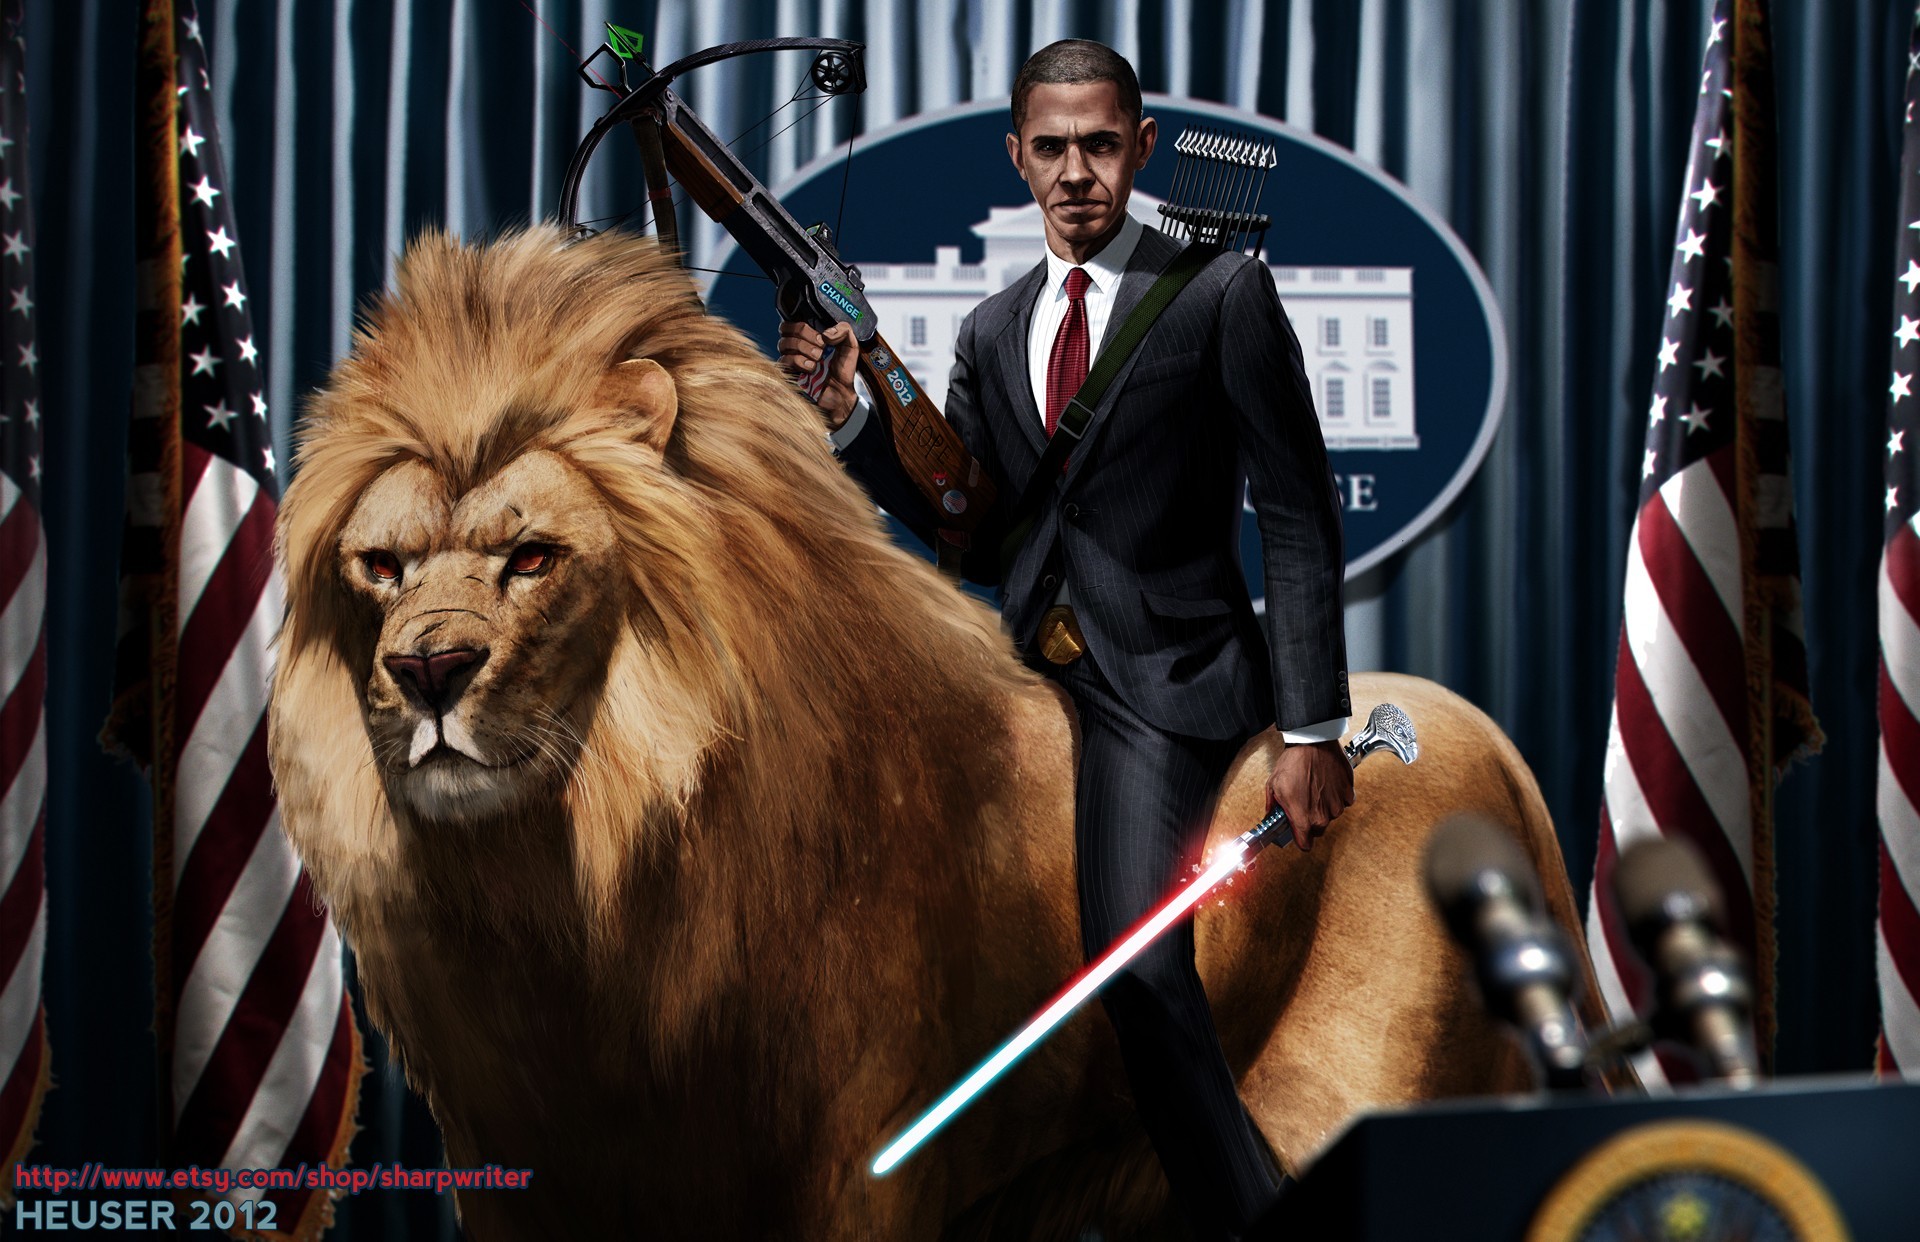 7 Badass Digital Art Wallpapers of United States Presidents | DigitalArt.io